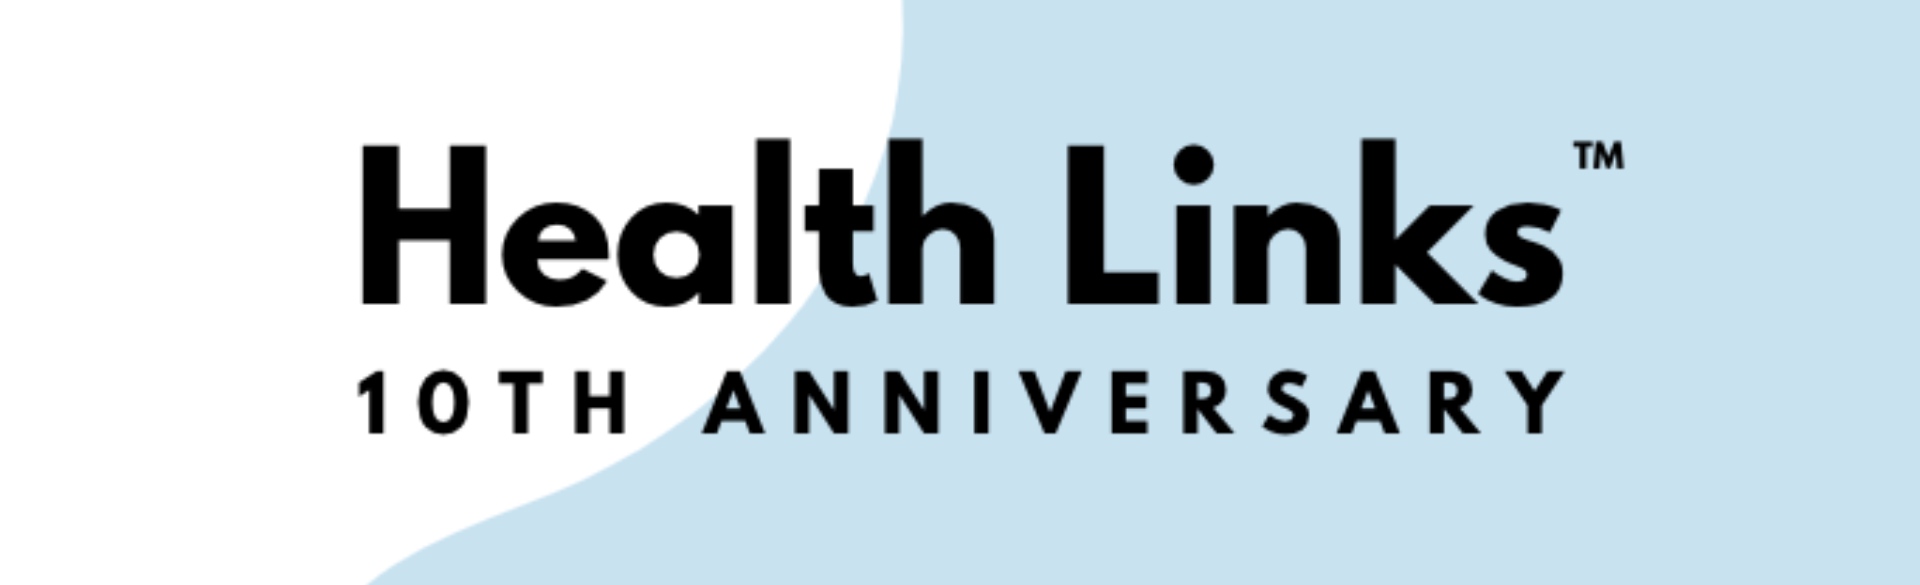 Health Links 10th Anniversary